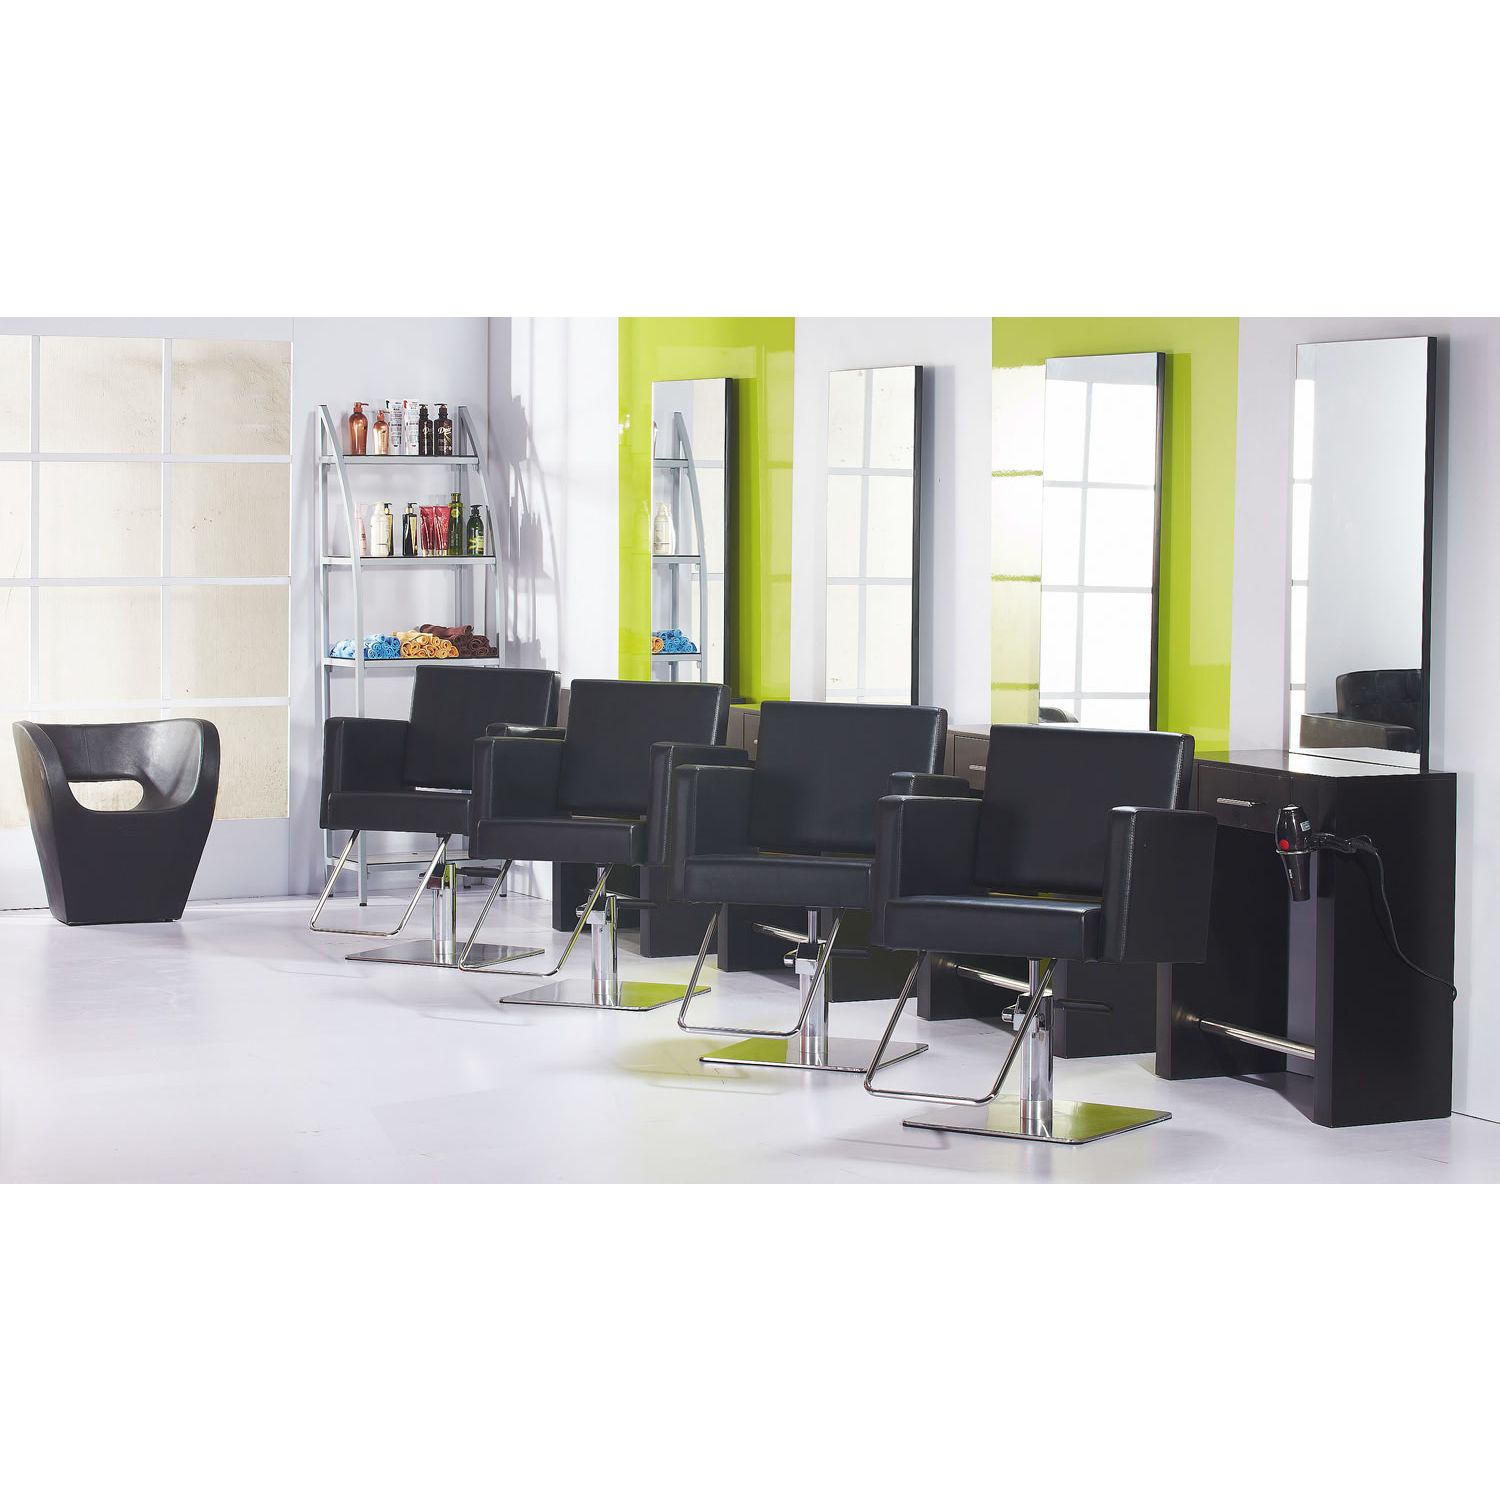 AGS Beauty: Salon Equipment, Salon Furniture Wholesale, Salon